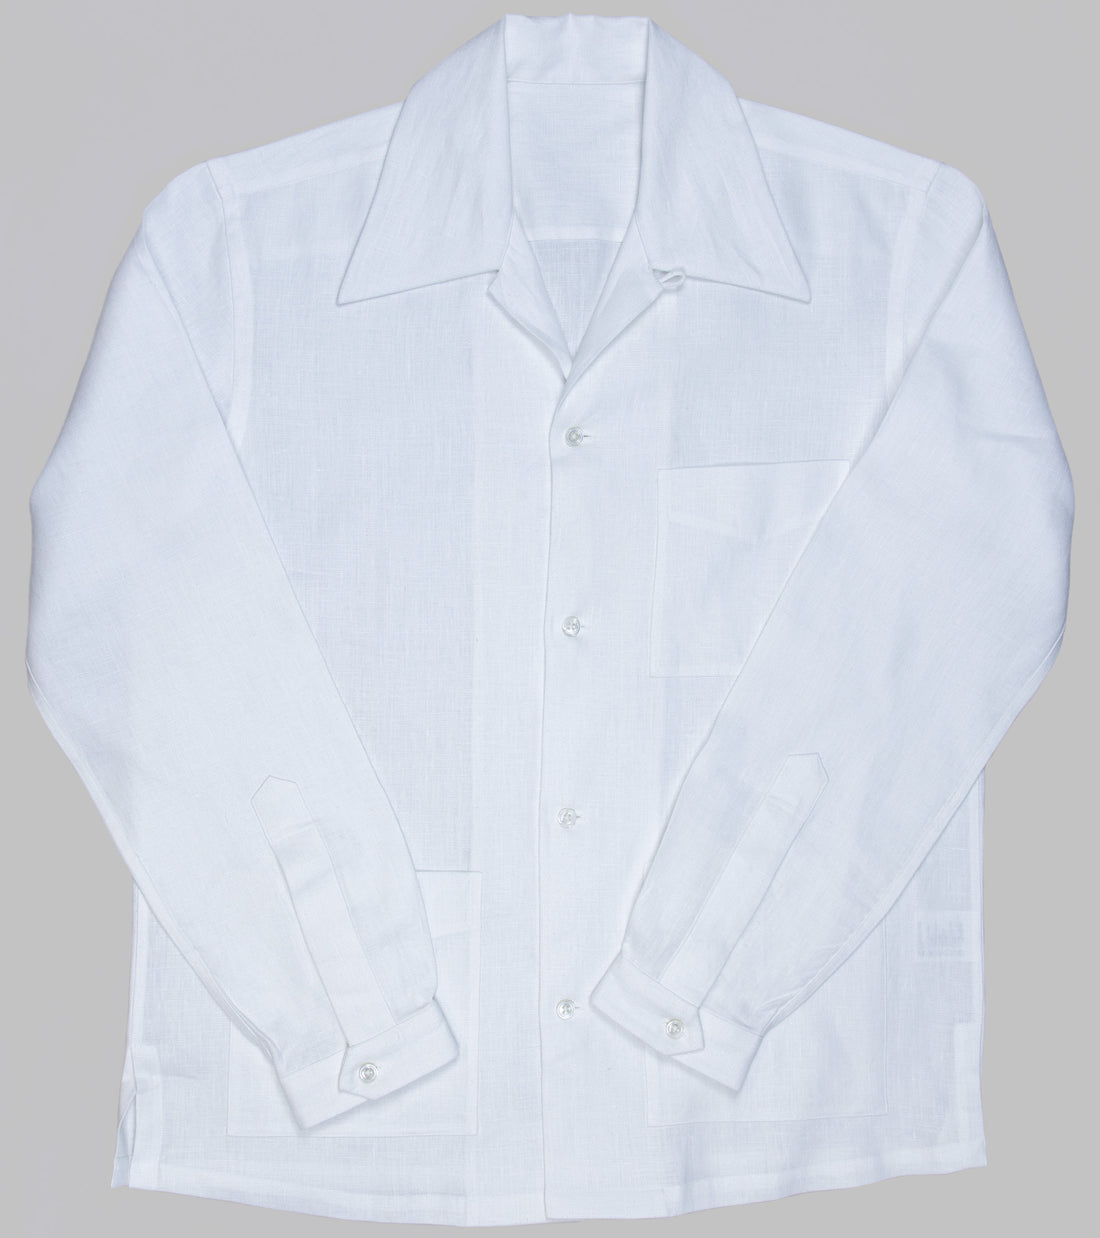  Bryceland's Cabana Shirt White